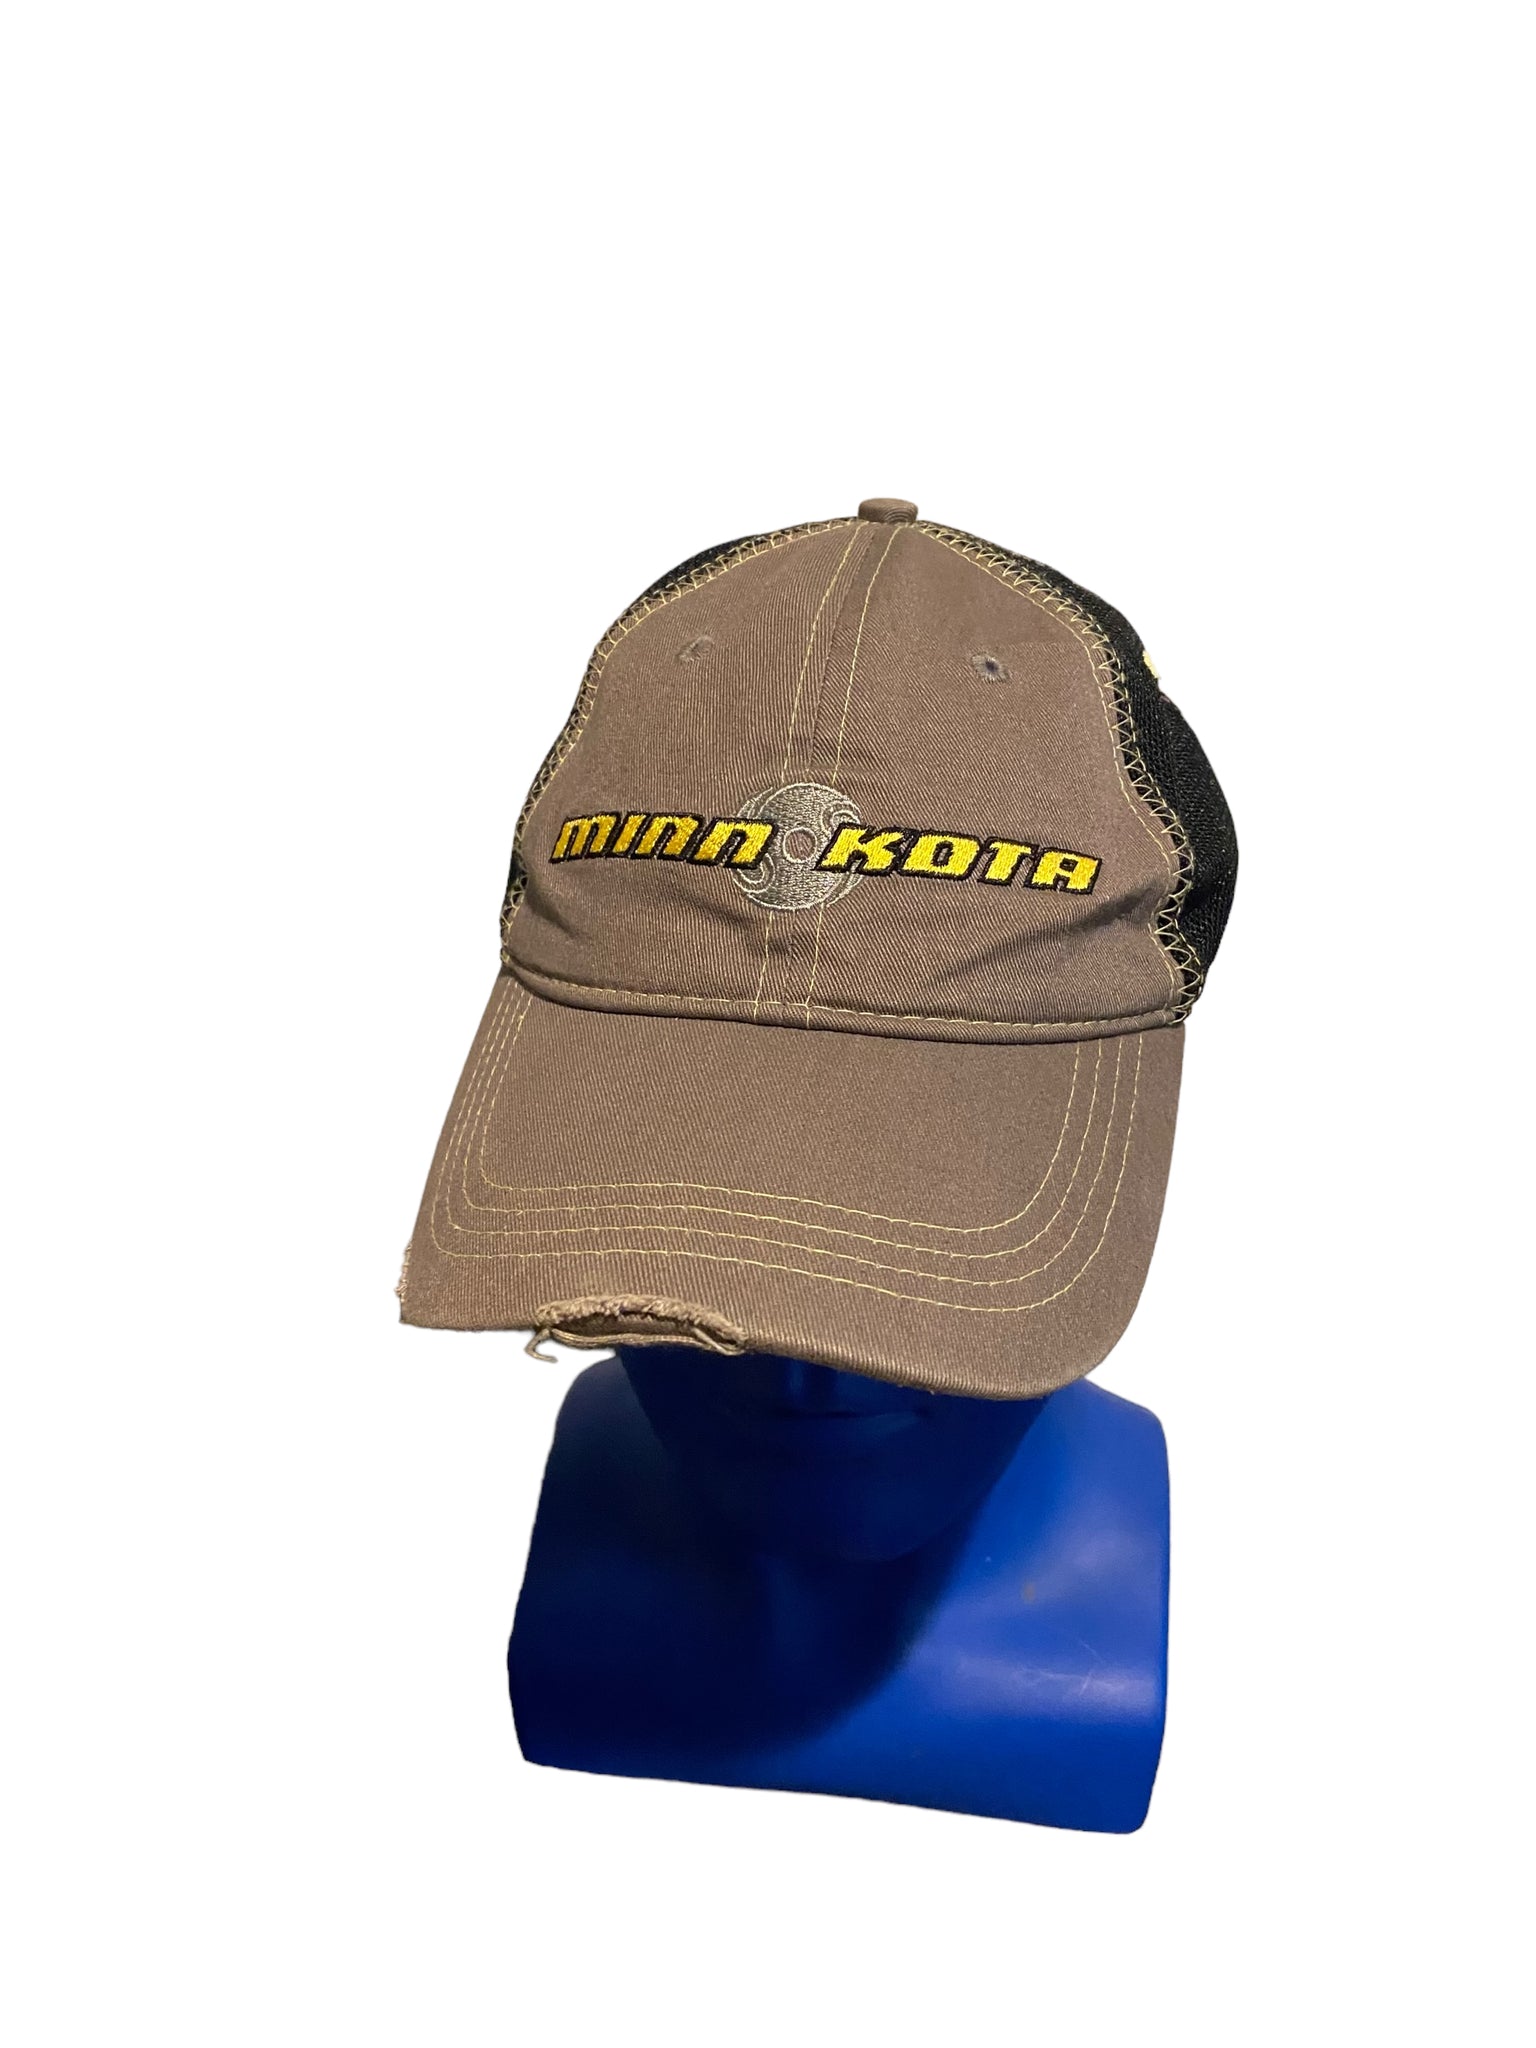 minn kota emboridered script logo adjuatable strap Gray And Black Dad Hat